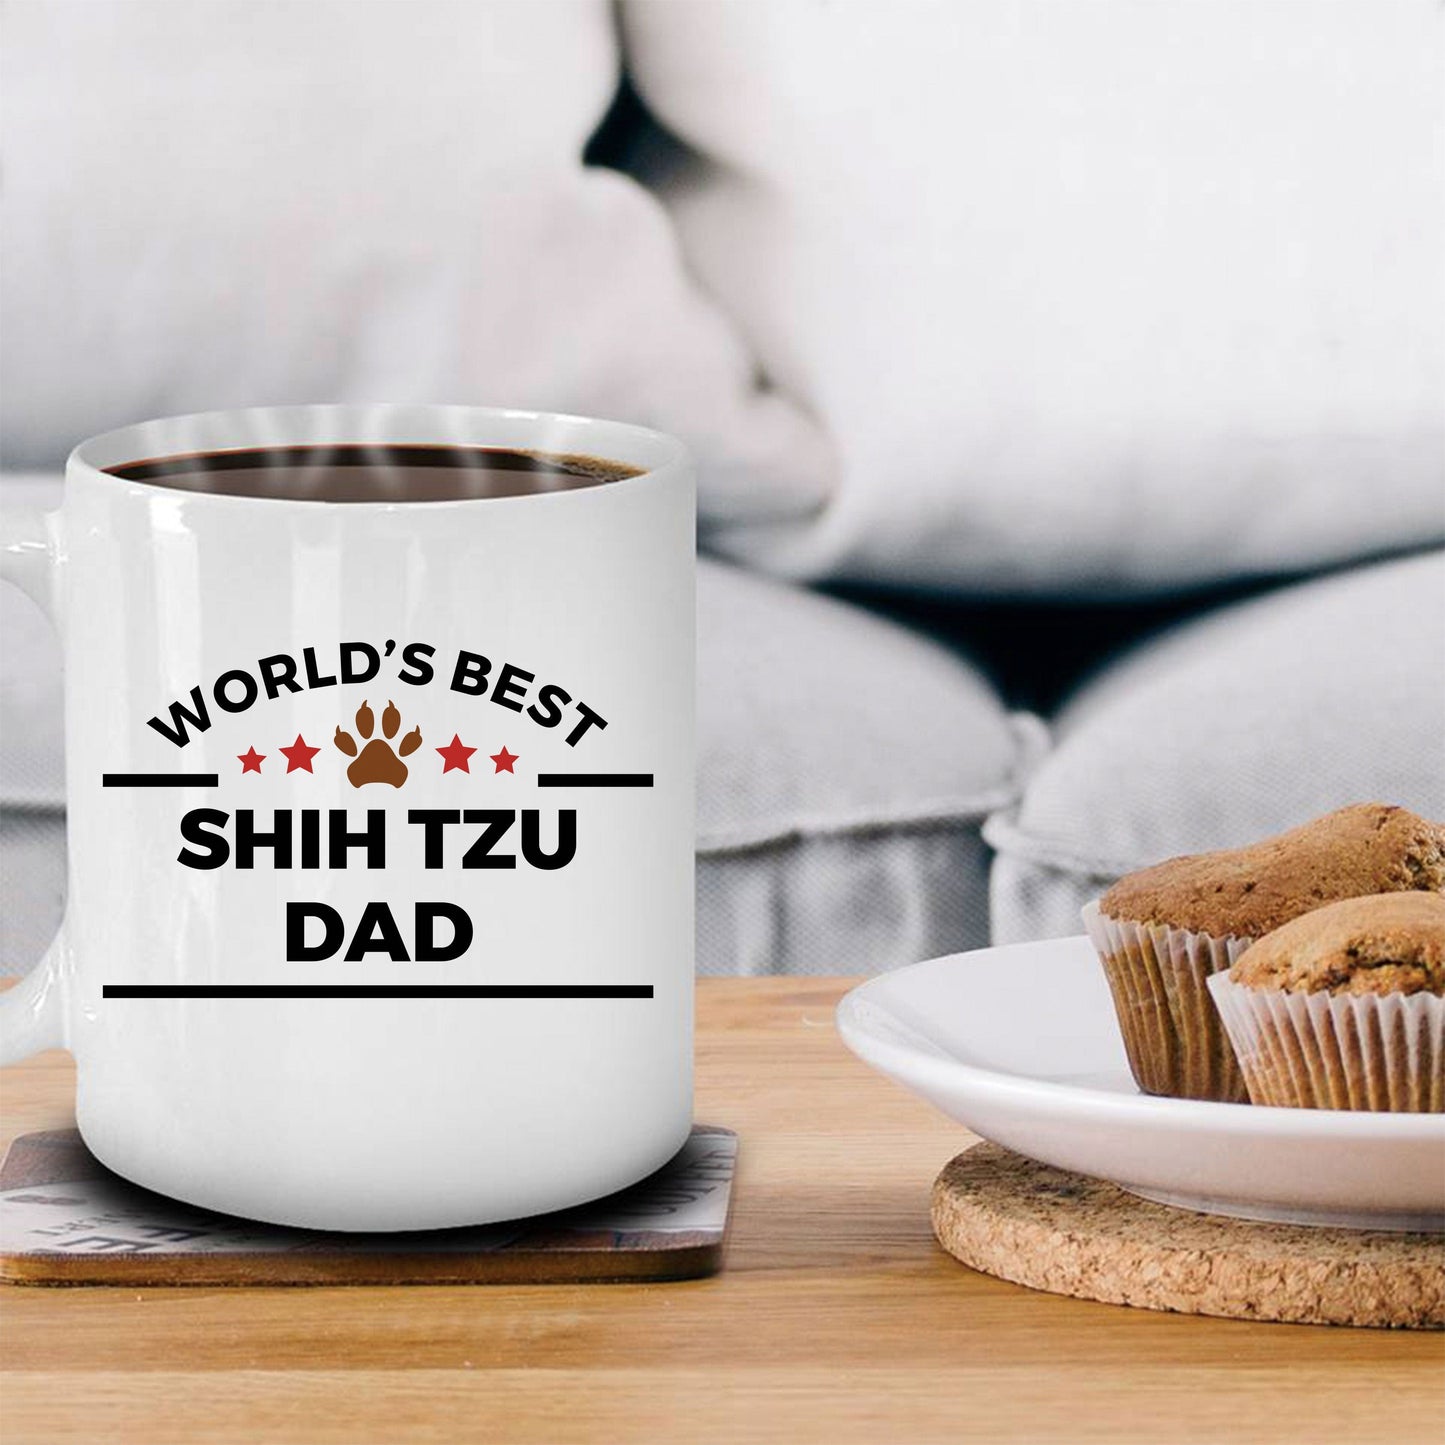 Shih Tzu Dog Dad Coffee Mug